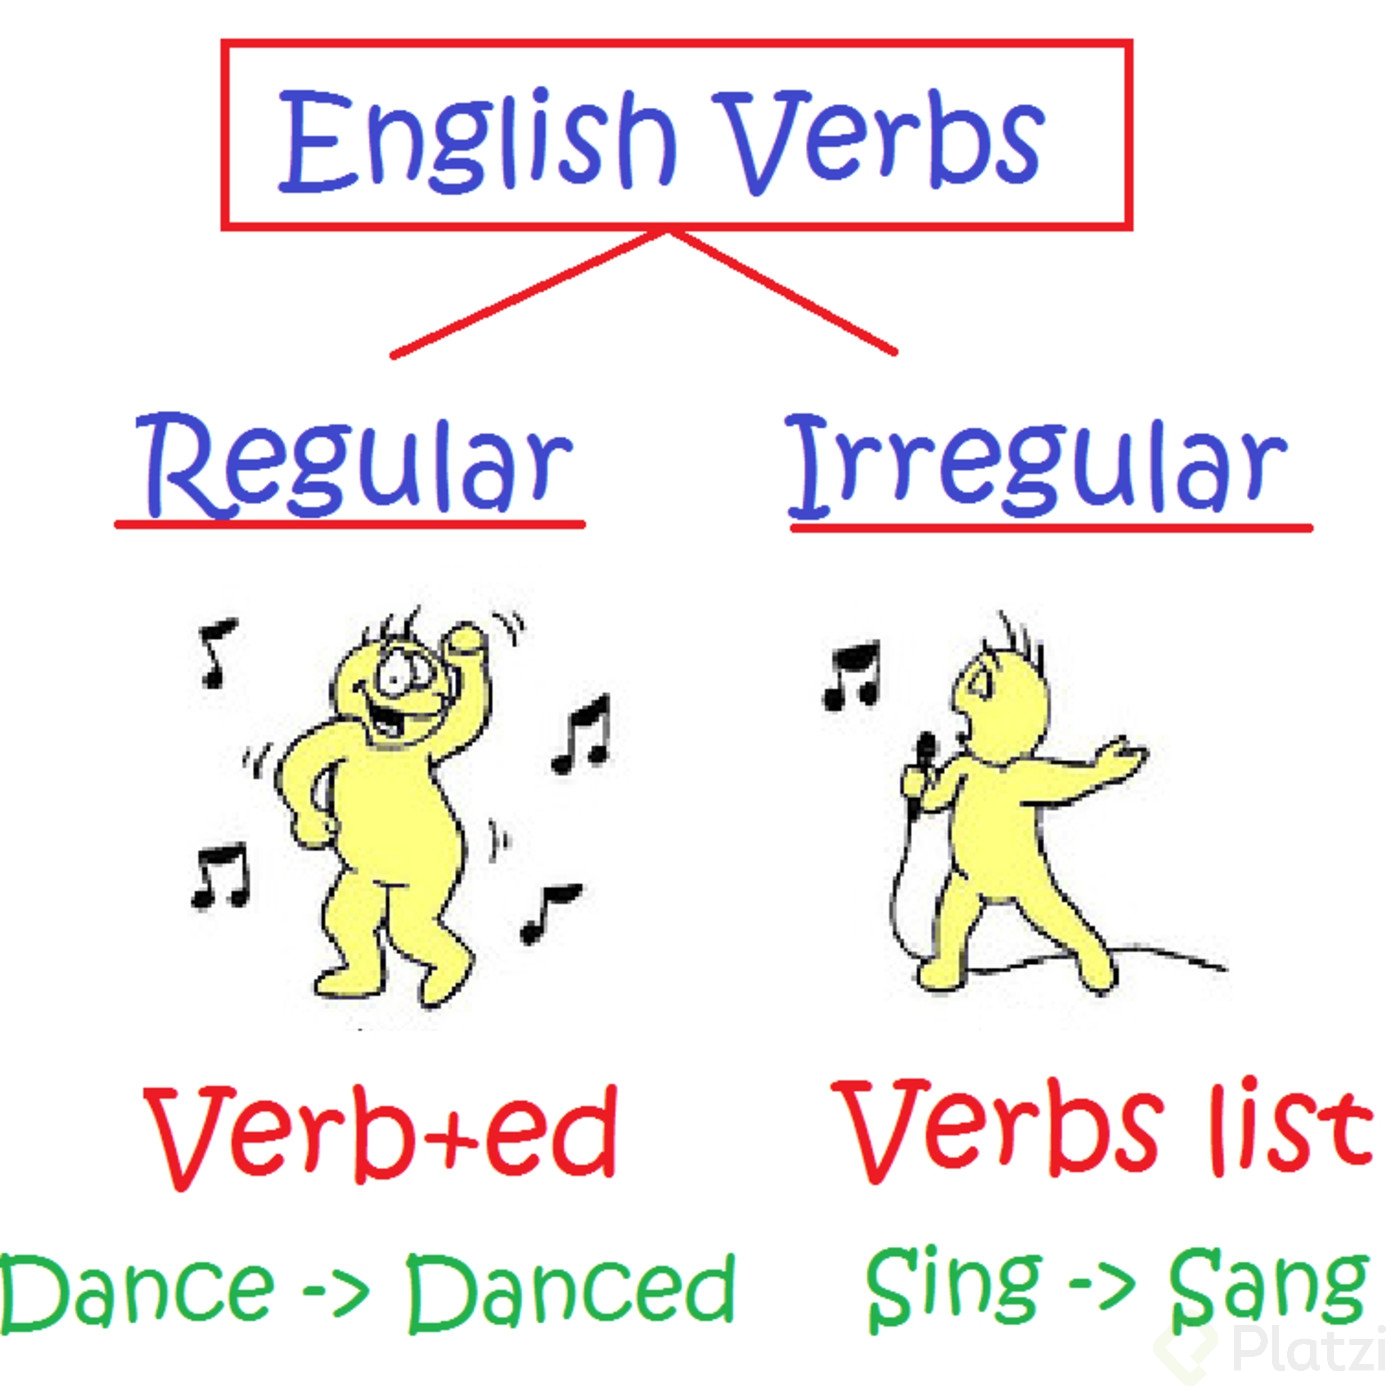 regular-and-irregular-verbs-platzi